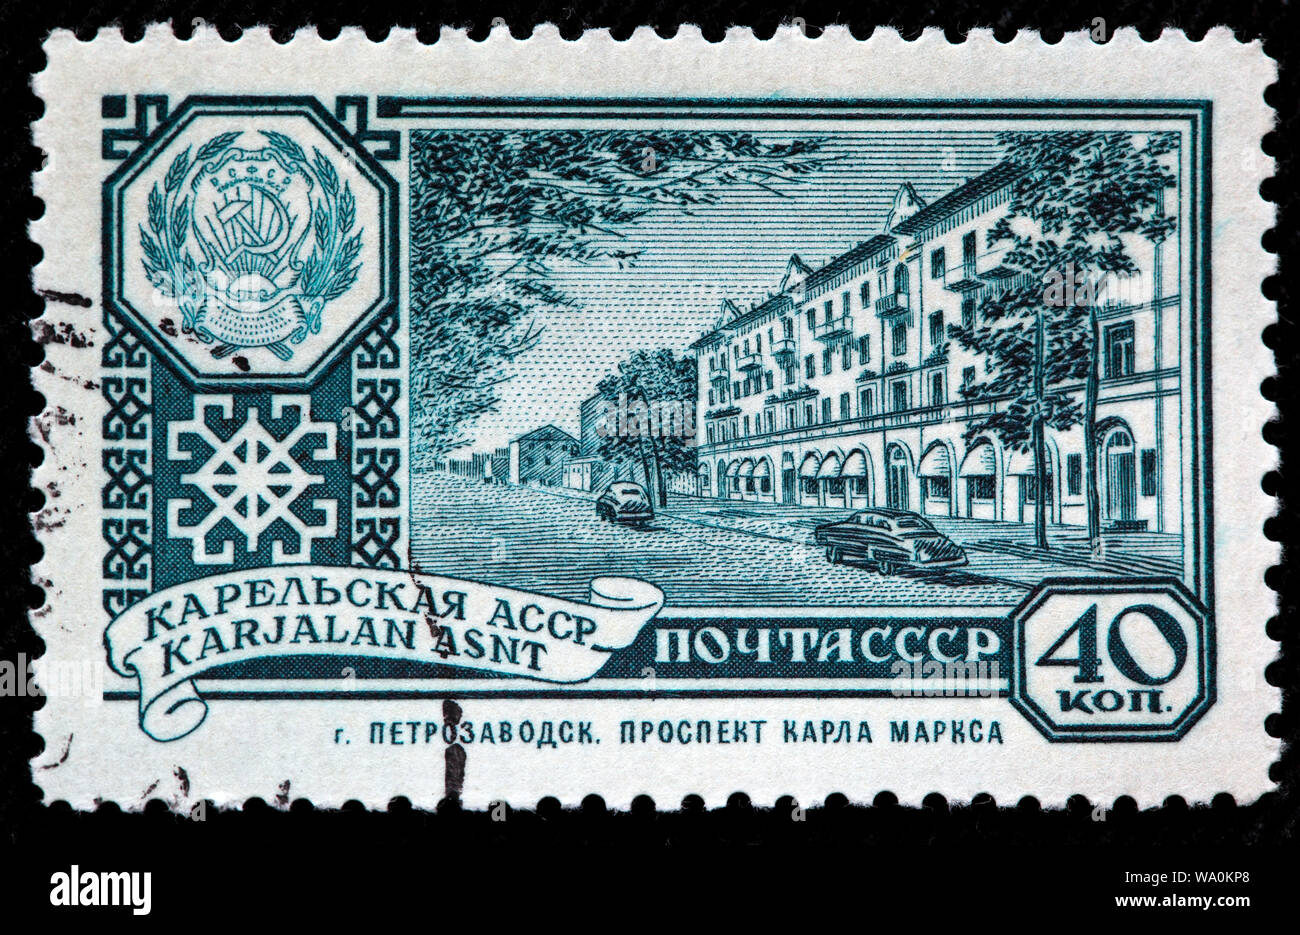 Petrozavodsk, Karl Marx Prospect, Karelian ASSR, Republic of Karelia, postage stamp, Russia, USSR, 1960 Stock Photo